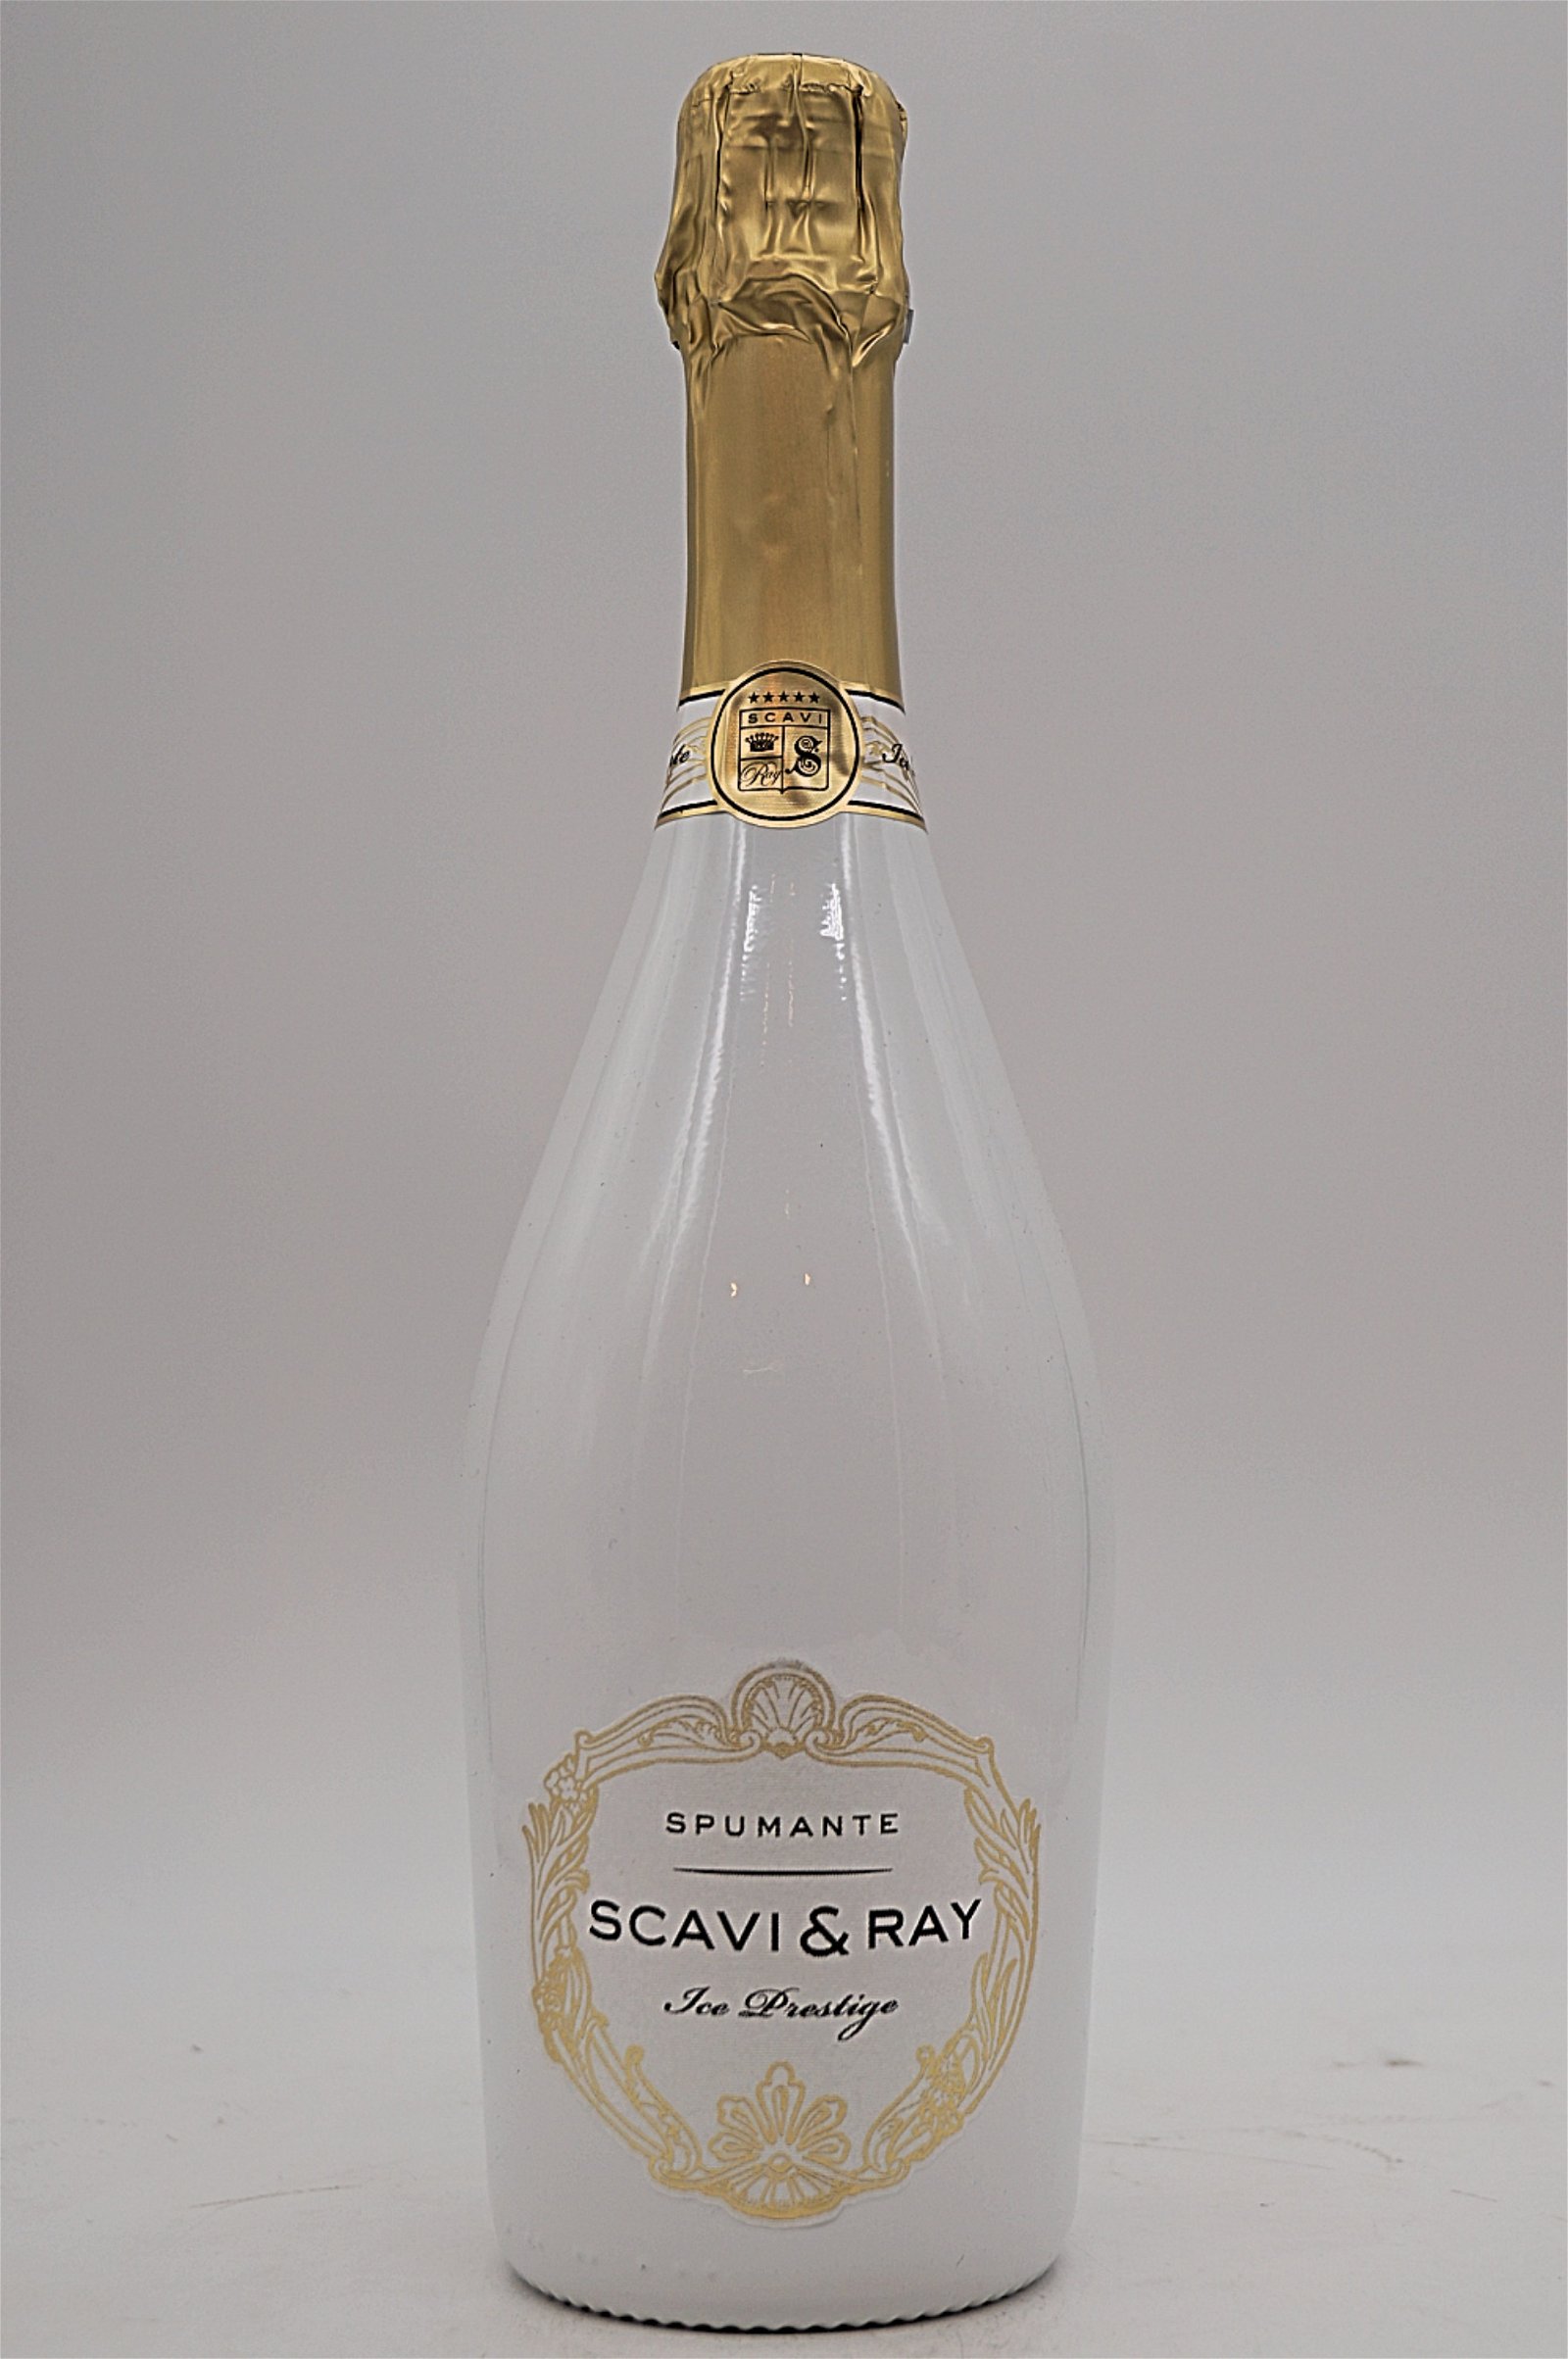 Scavi & Ray Ice Prestige Spumante